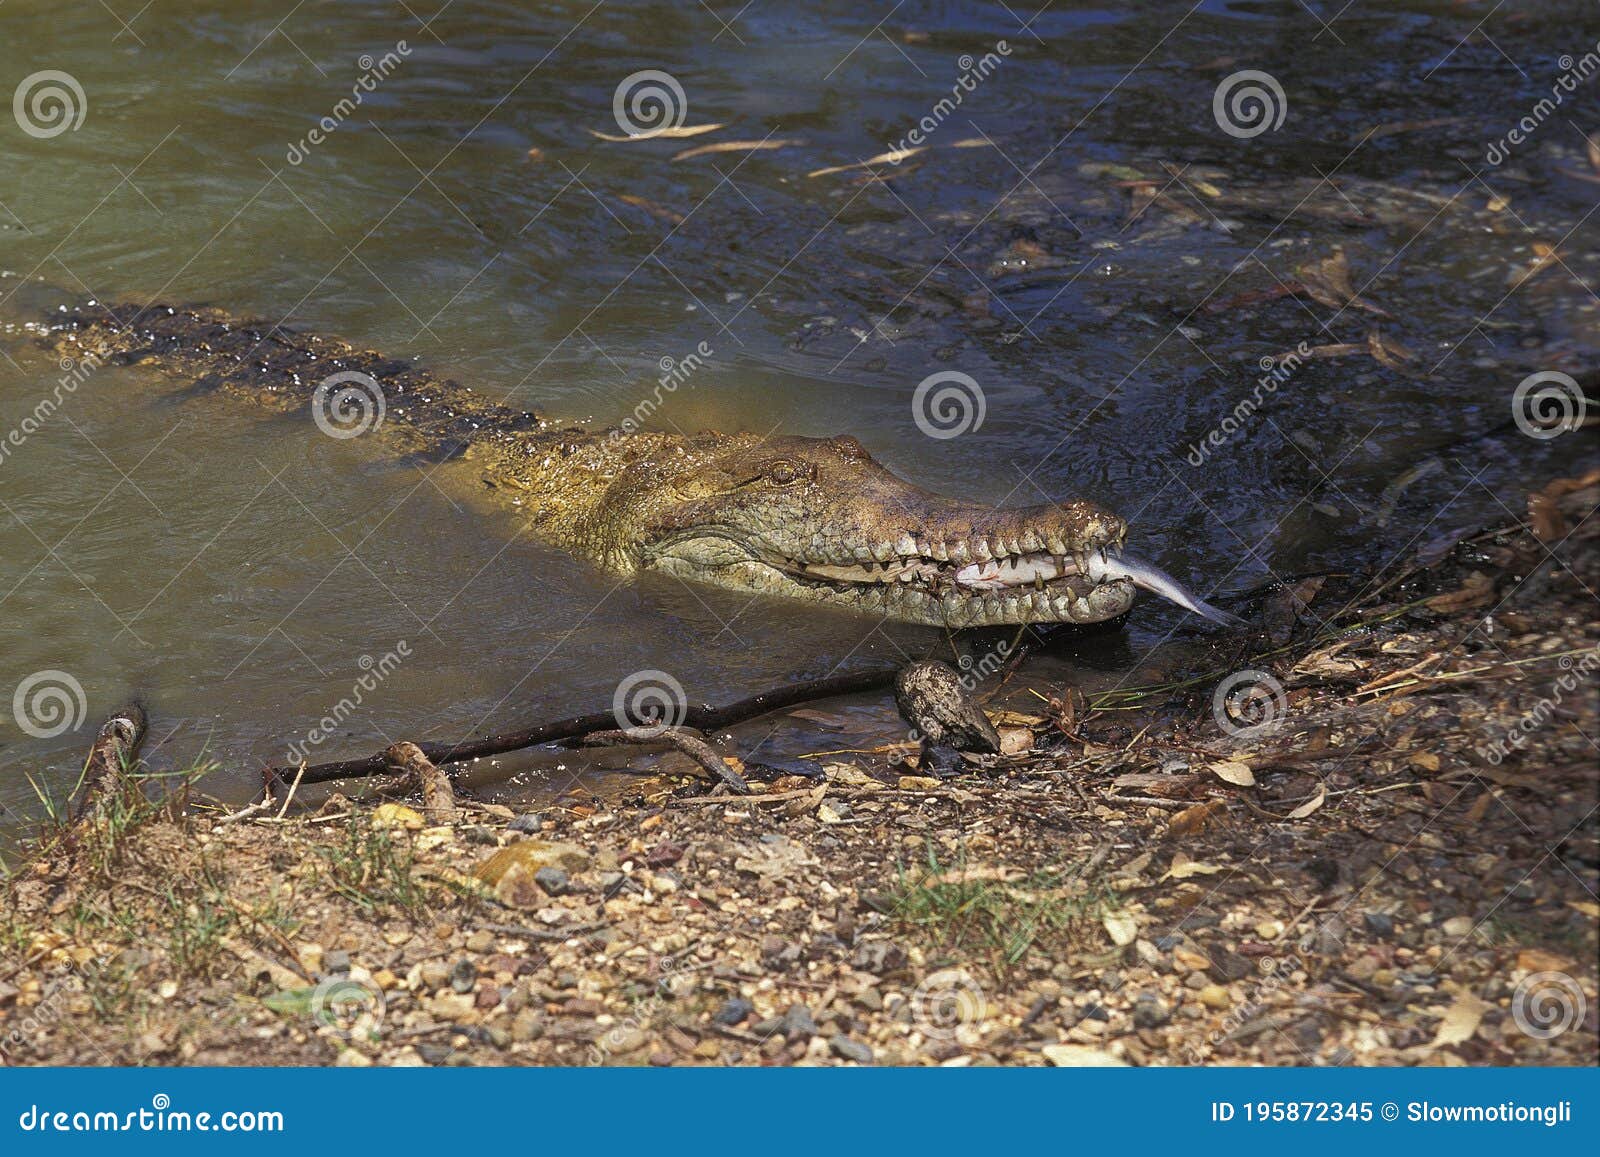 Australian Freshwater Crocodile, Crocodylus Johnstoni, Adult Eating Fish, Australia Stock Image - of wildlife, crocodylidae: 195872345